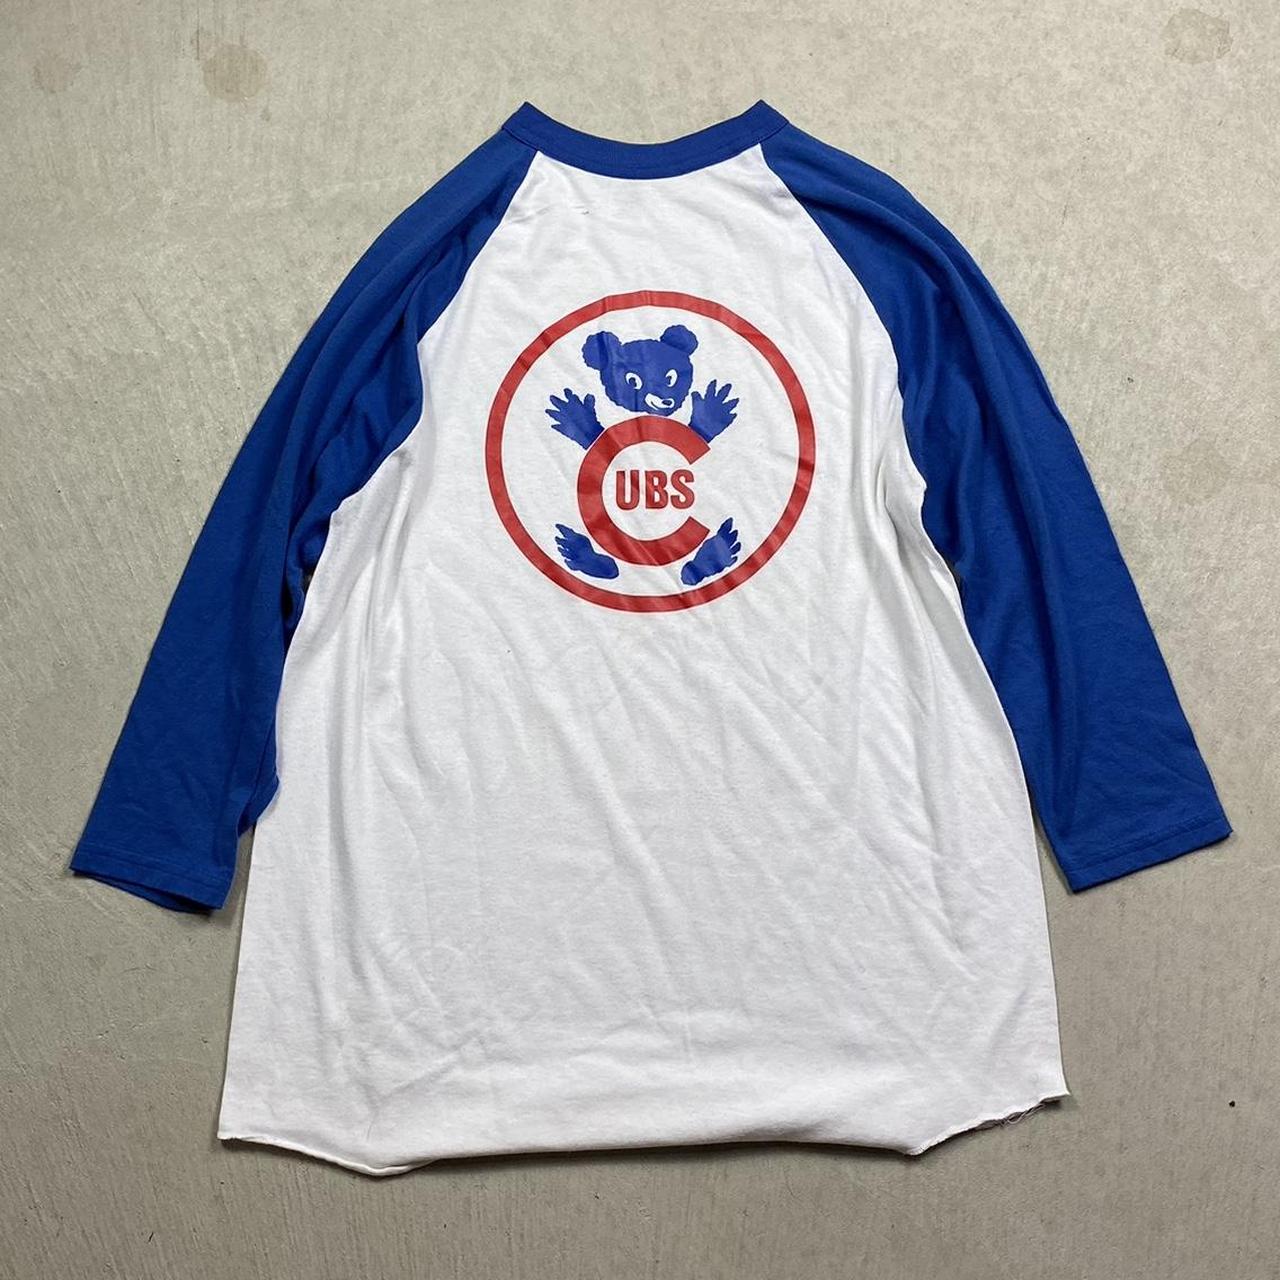 Shirts - Chicago Cubs Throwback Apparel & Jerseys